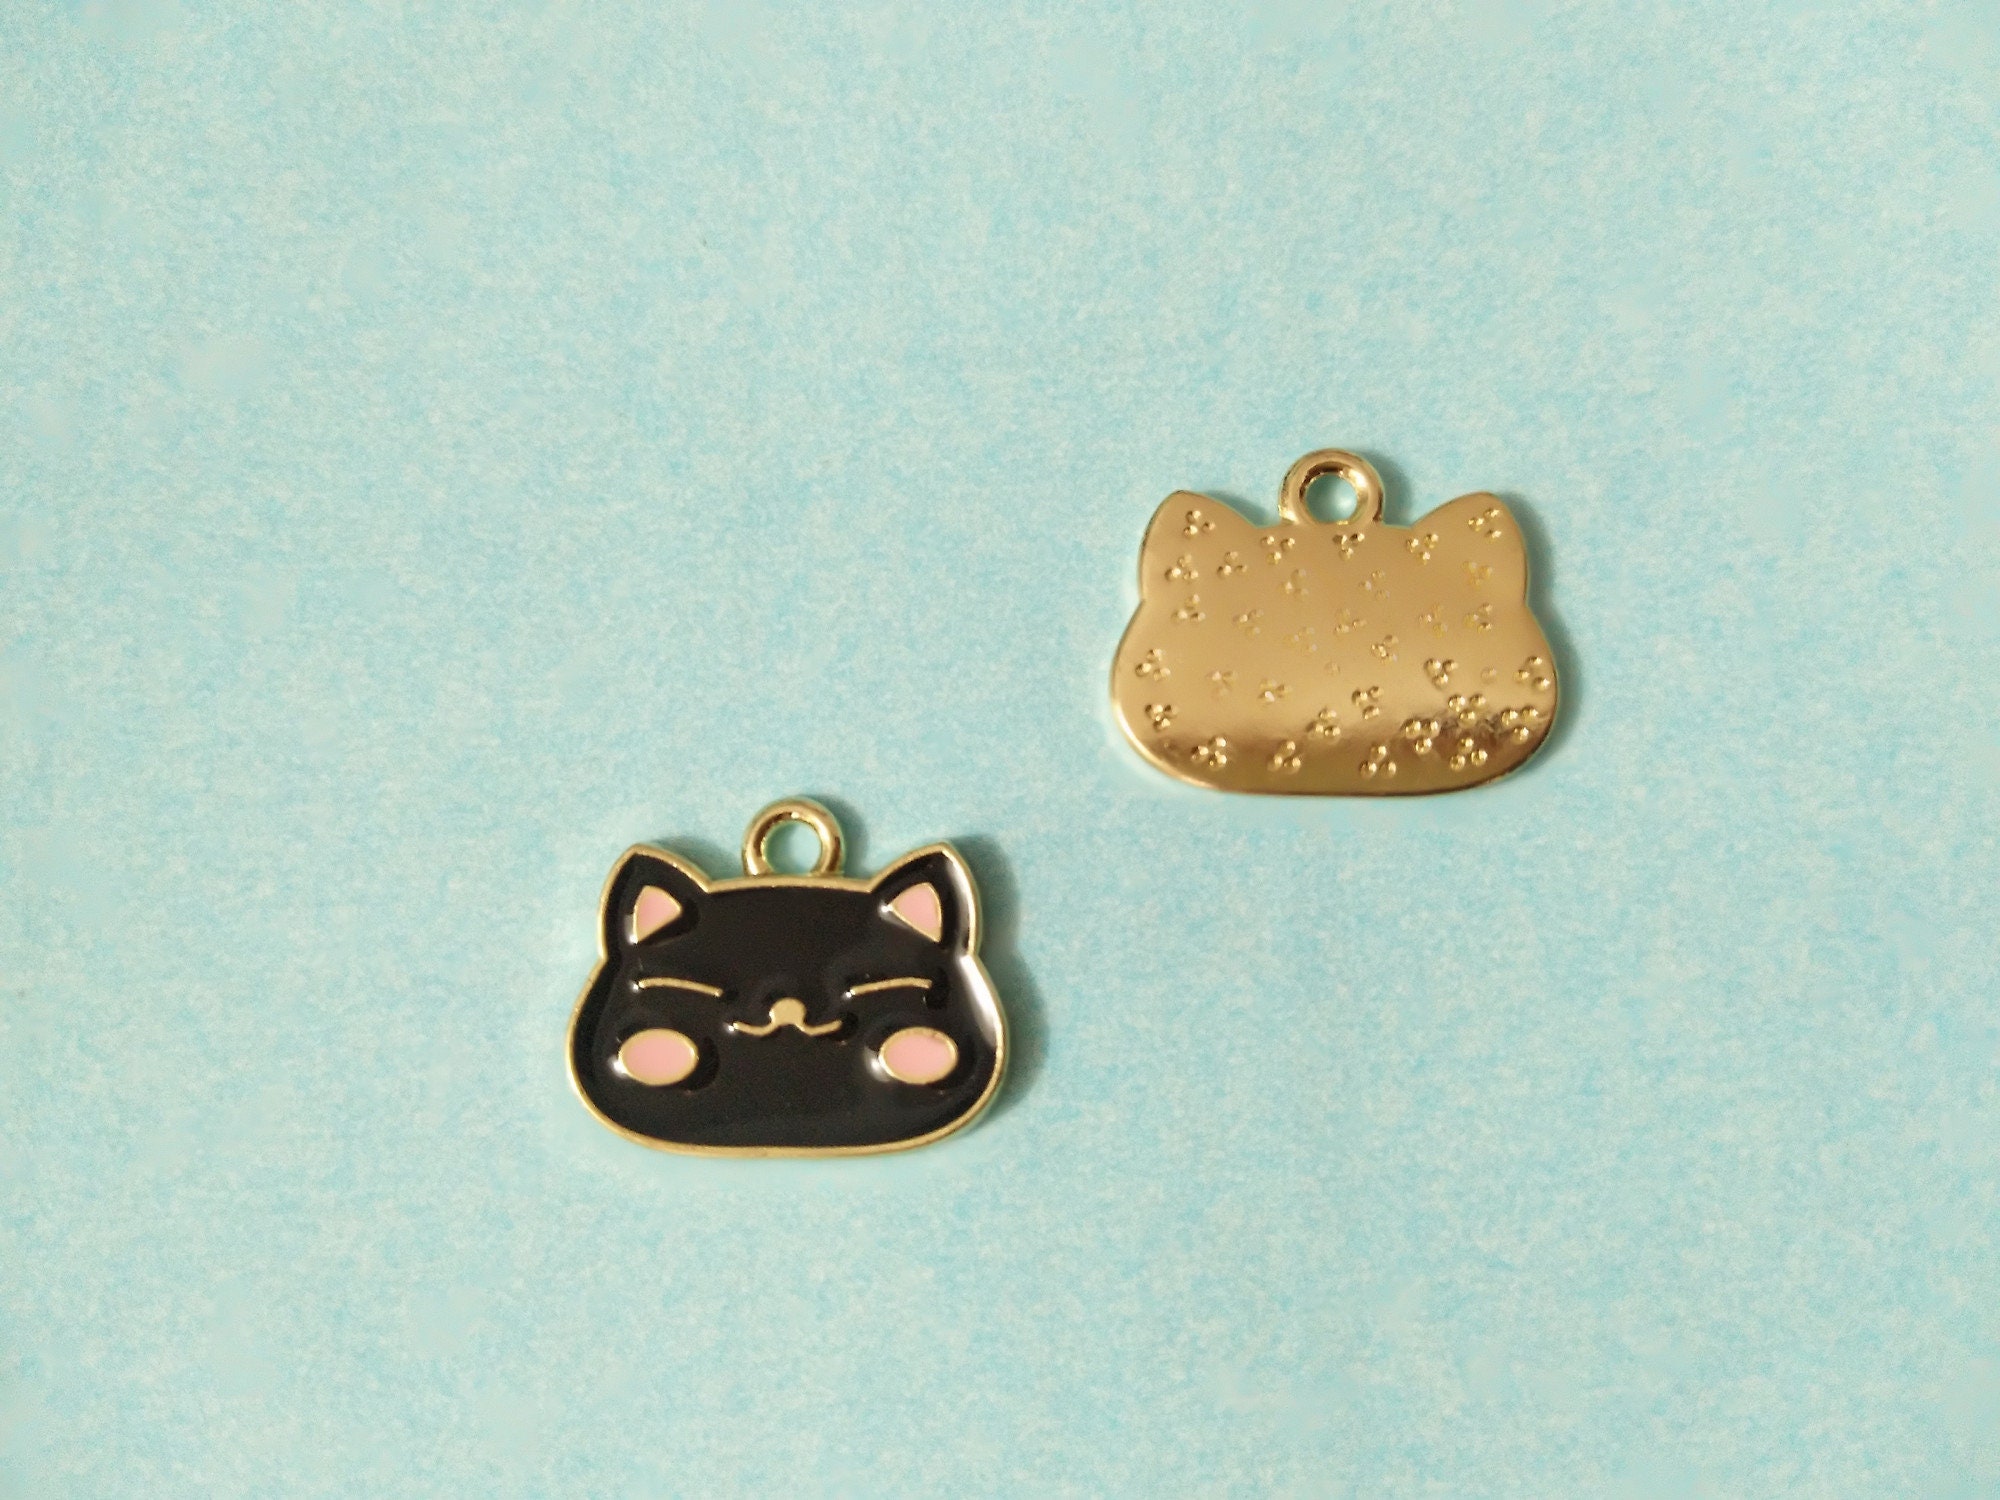 10pcs/lot Cartoon Enamel Animal Cat Charms for Jewelry Making Cute